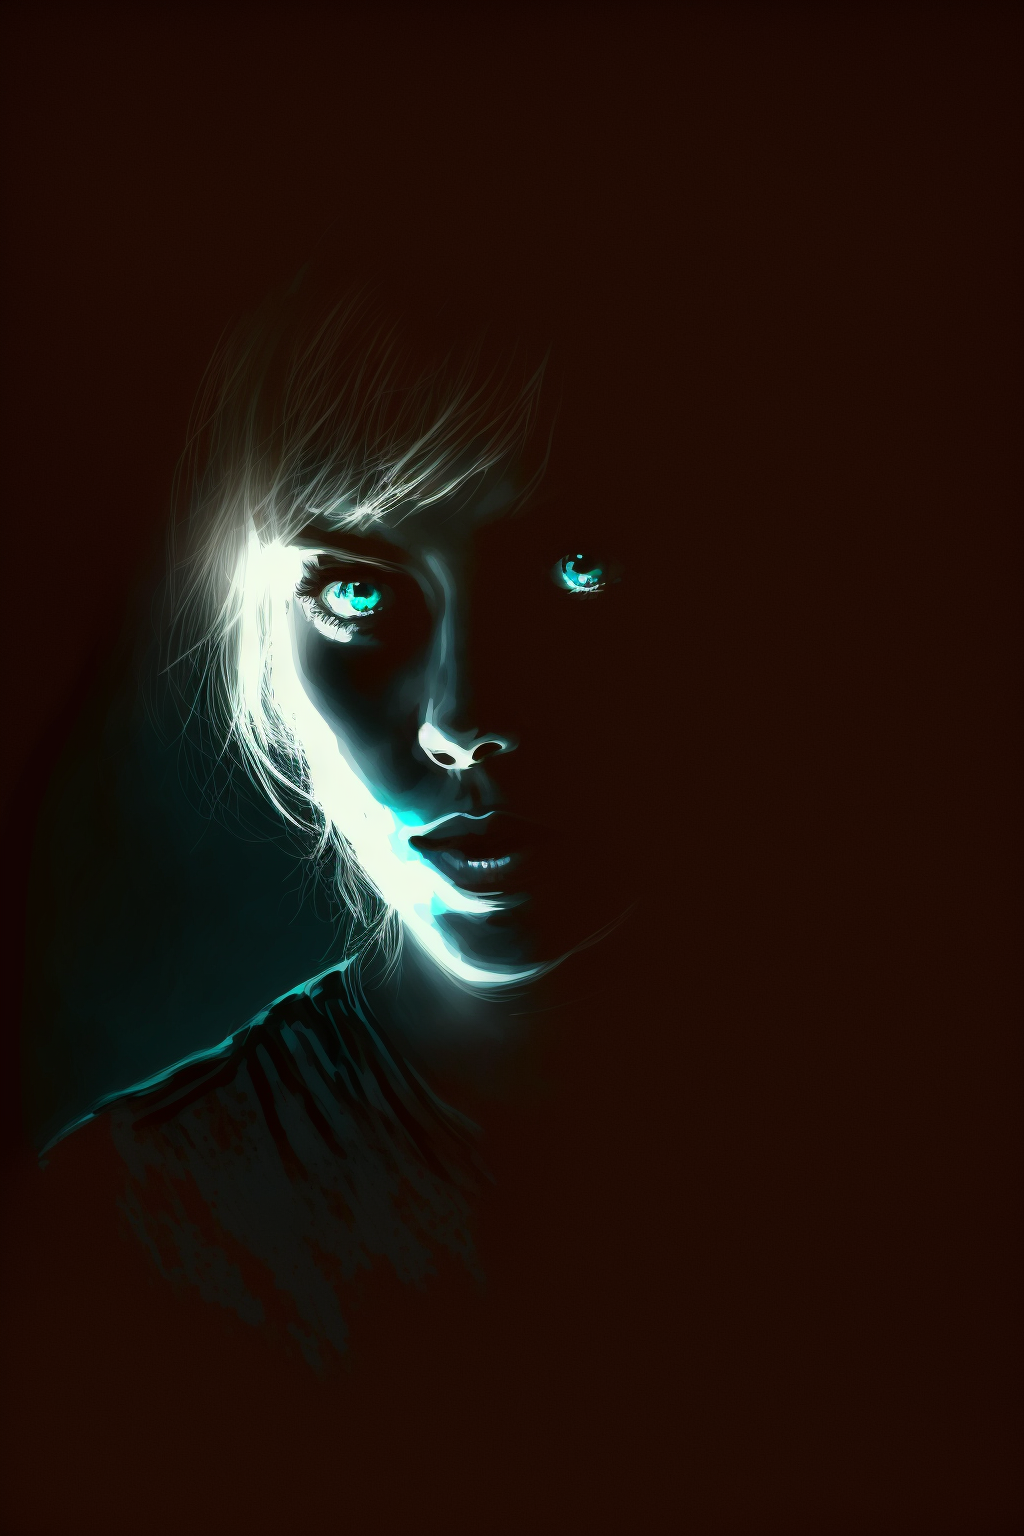 Woman in the dark with glowy eyes